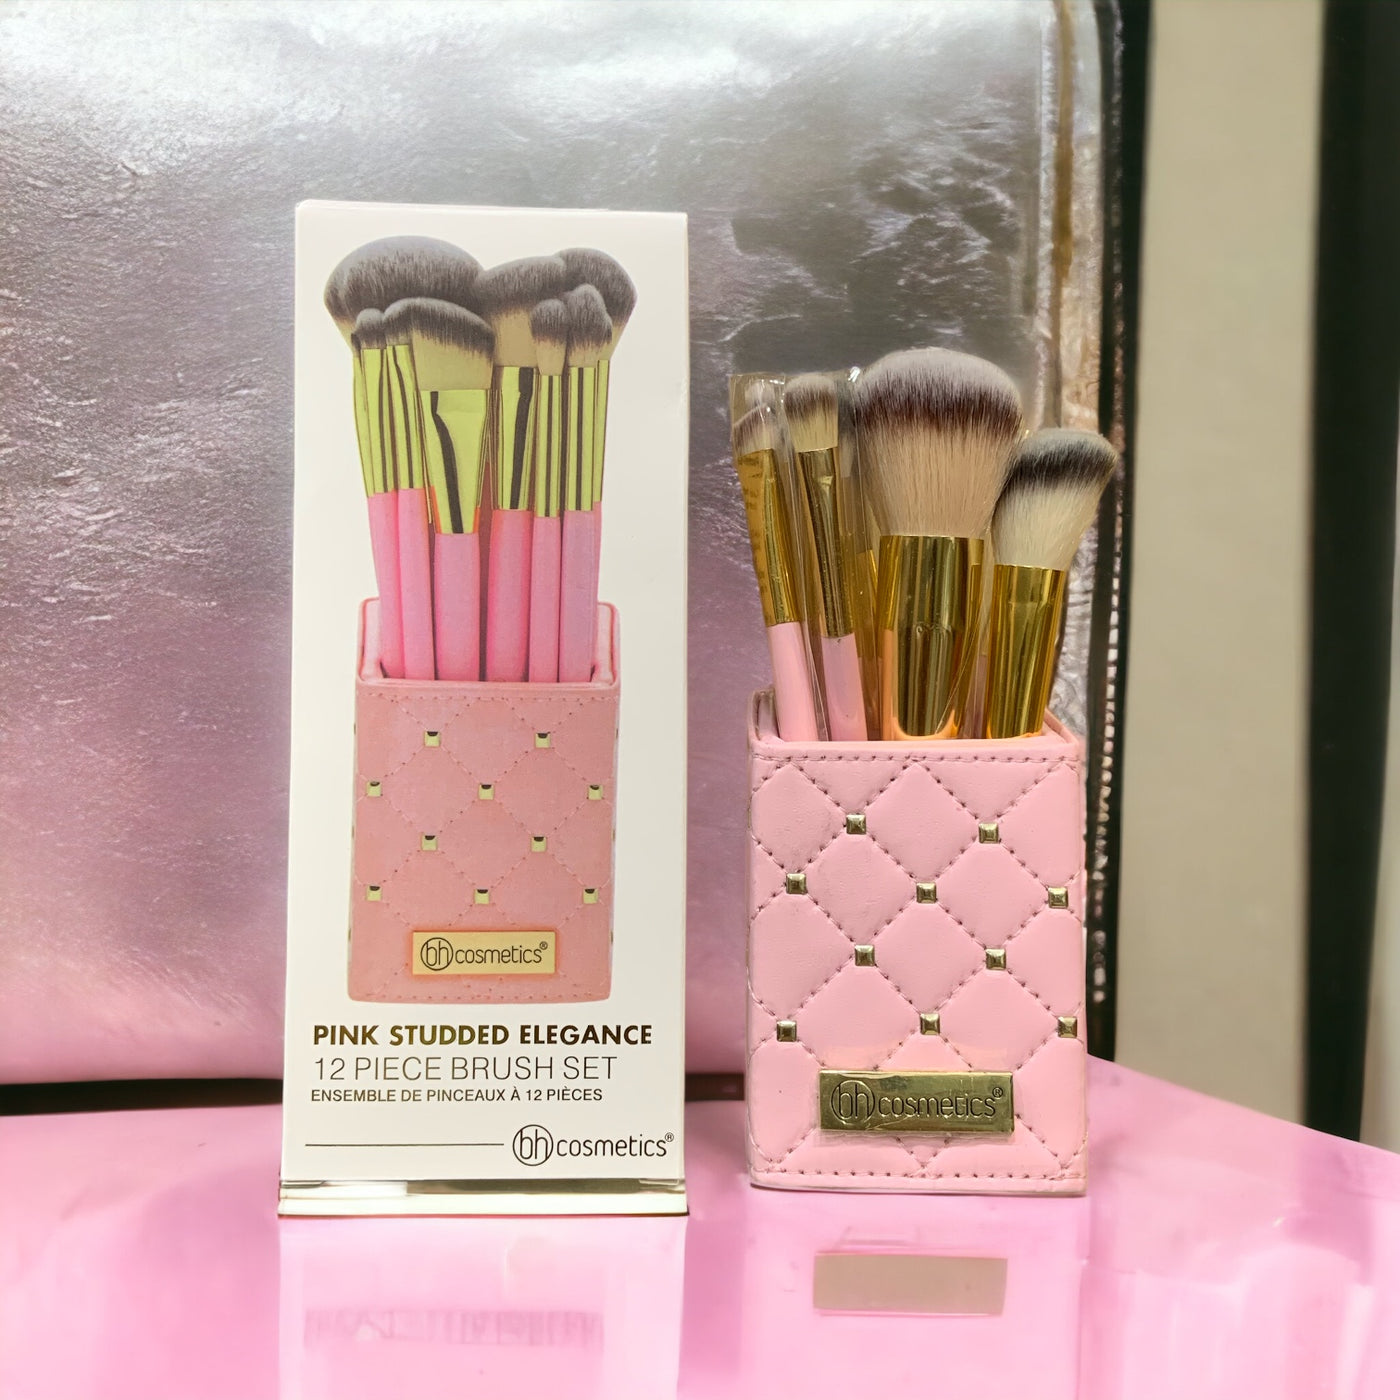 Bh Cosmetics Pink Studded Elegance Brushes 12 PCS